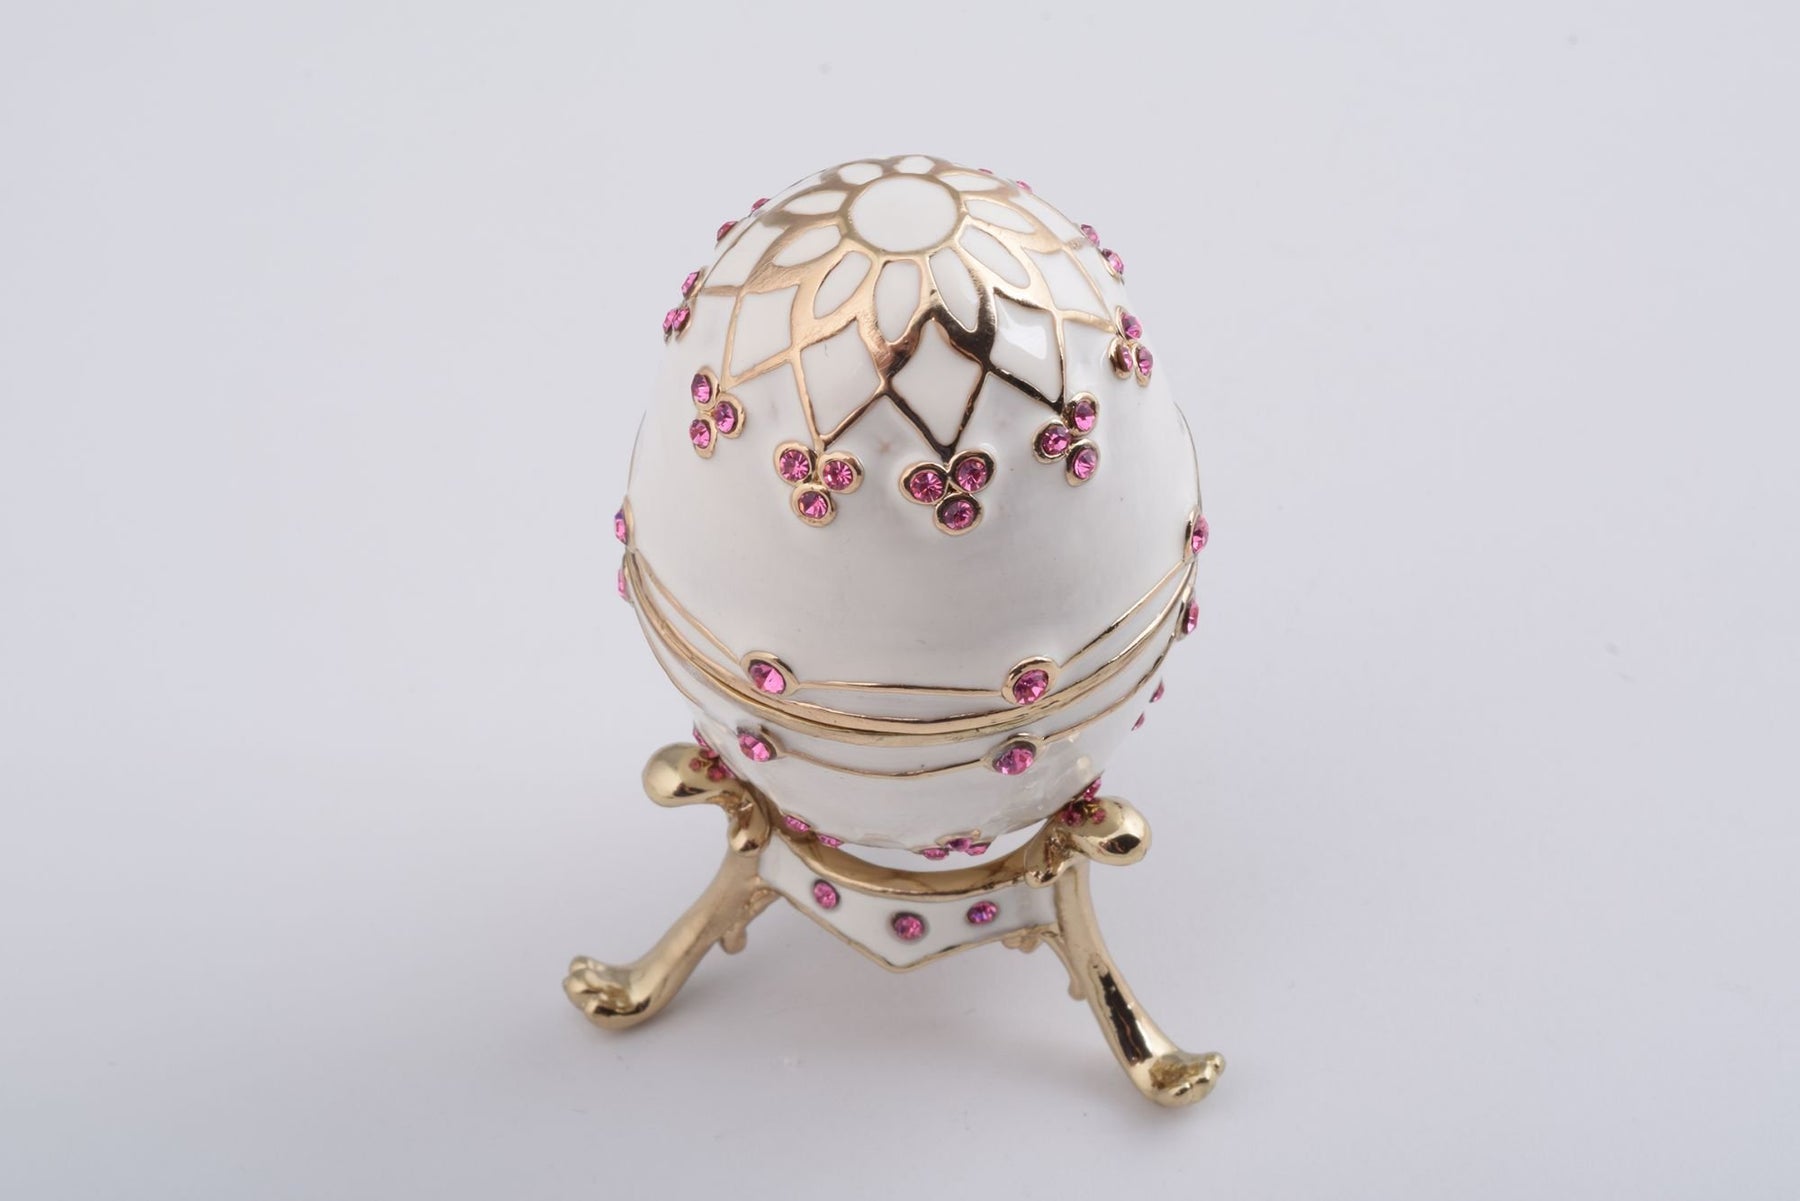 Keren Kopal White Faberge Egg with Pink Crystals  56.25